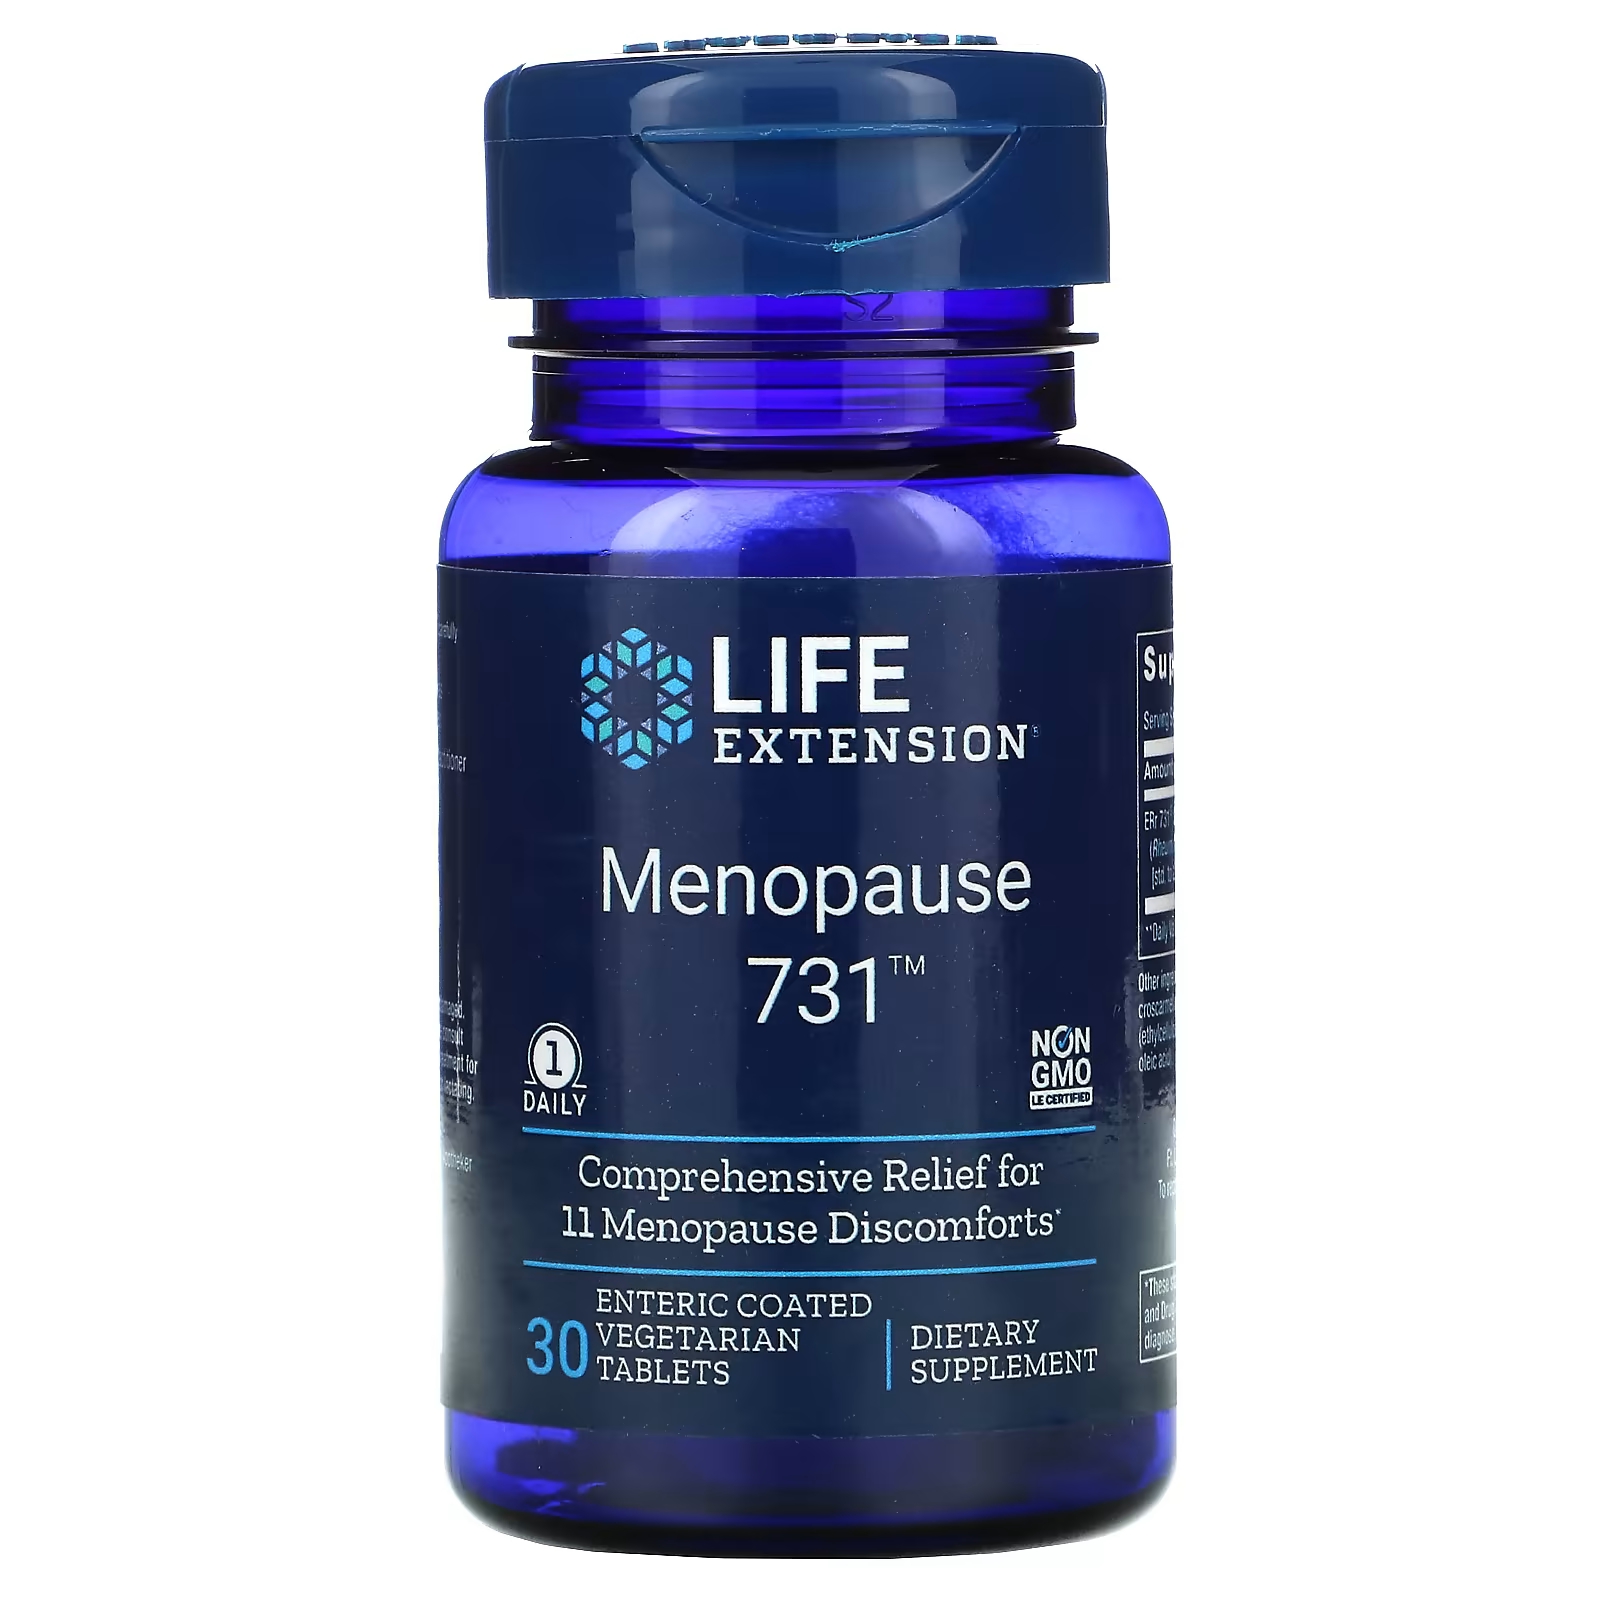 Пищевая добавка Life Extension Menopause 731, 30 таблеток life extension ampk активатор метаболизма 30 вегетарианский таблеток